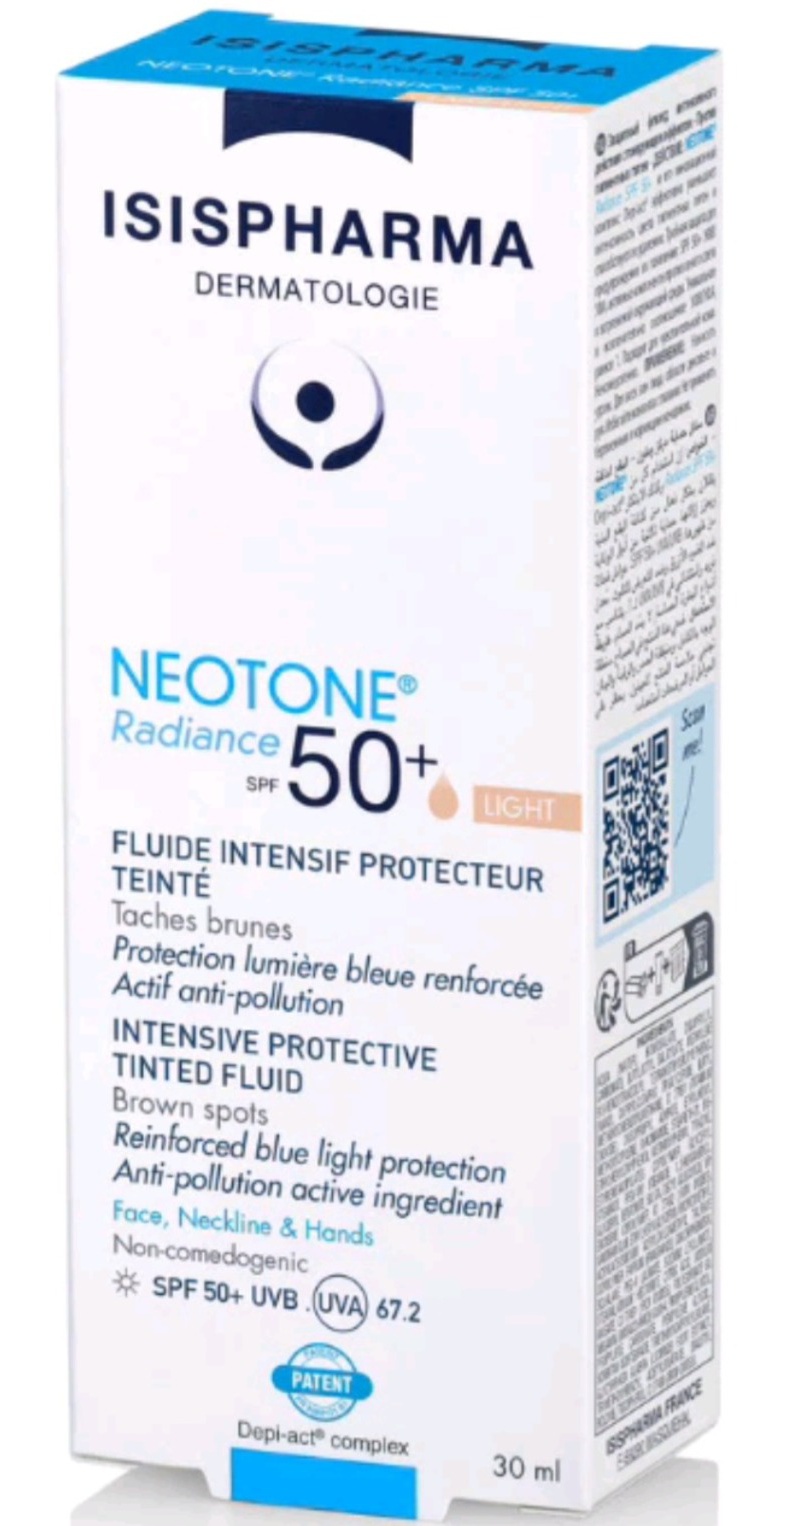 Isispharma Neotone Radiance SPF50+ Light